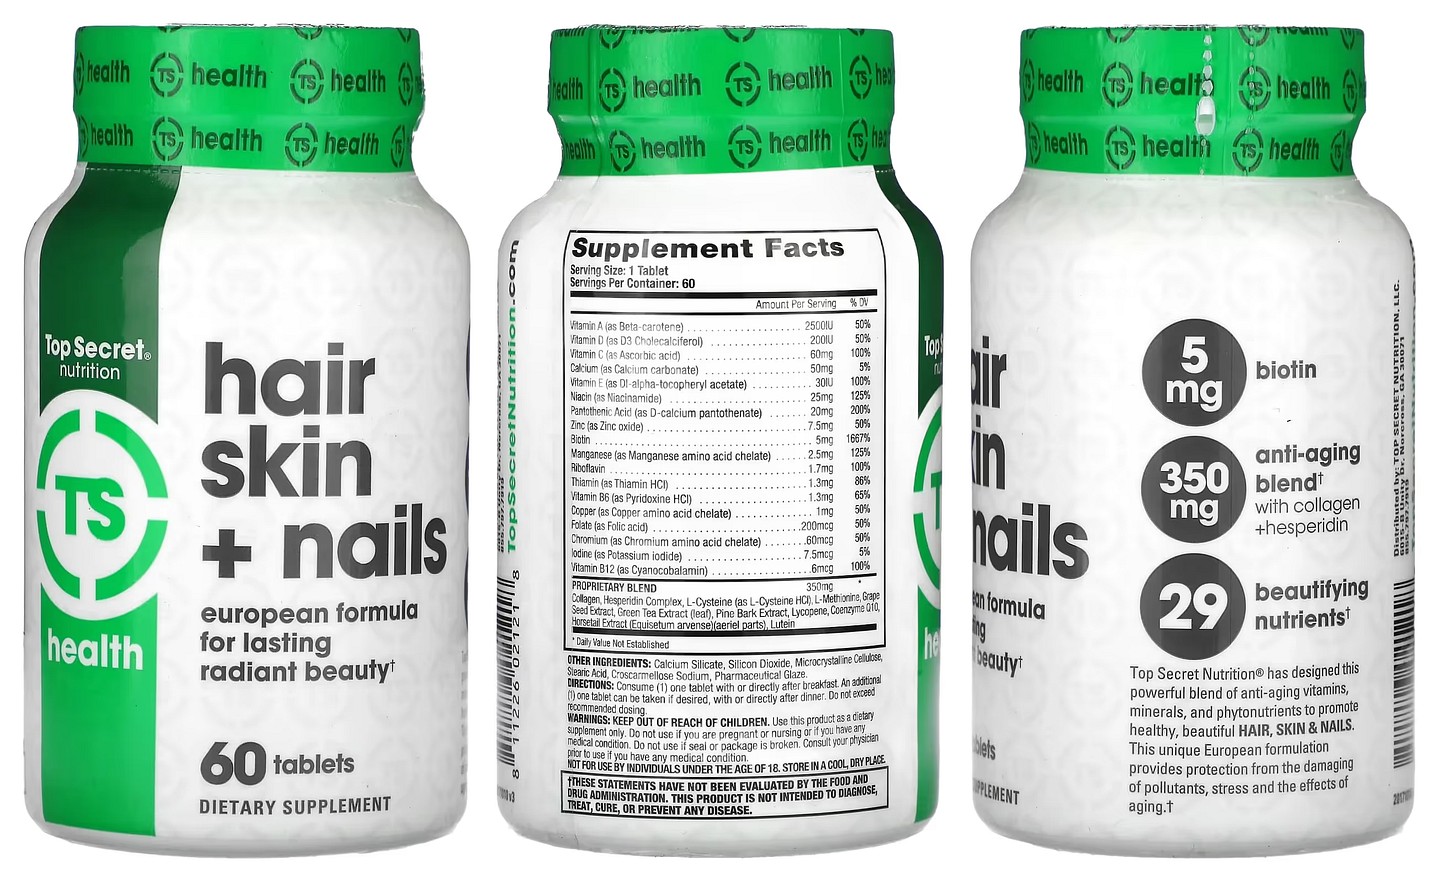 Top Secret Nutrition, Health, Hair Skin + Nails packaging